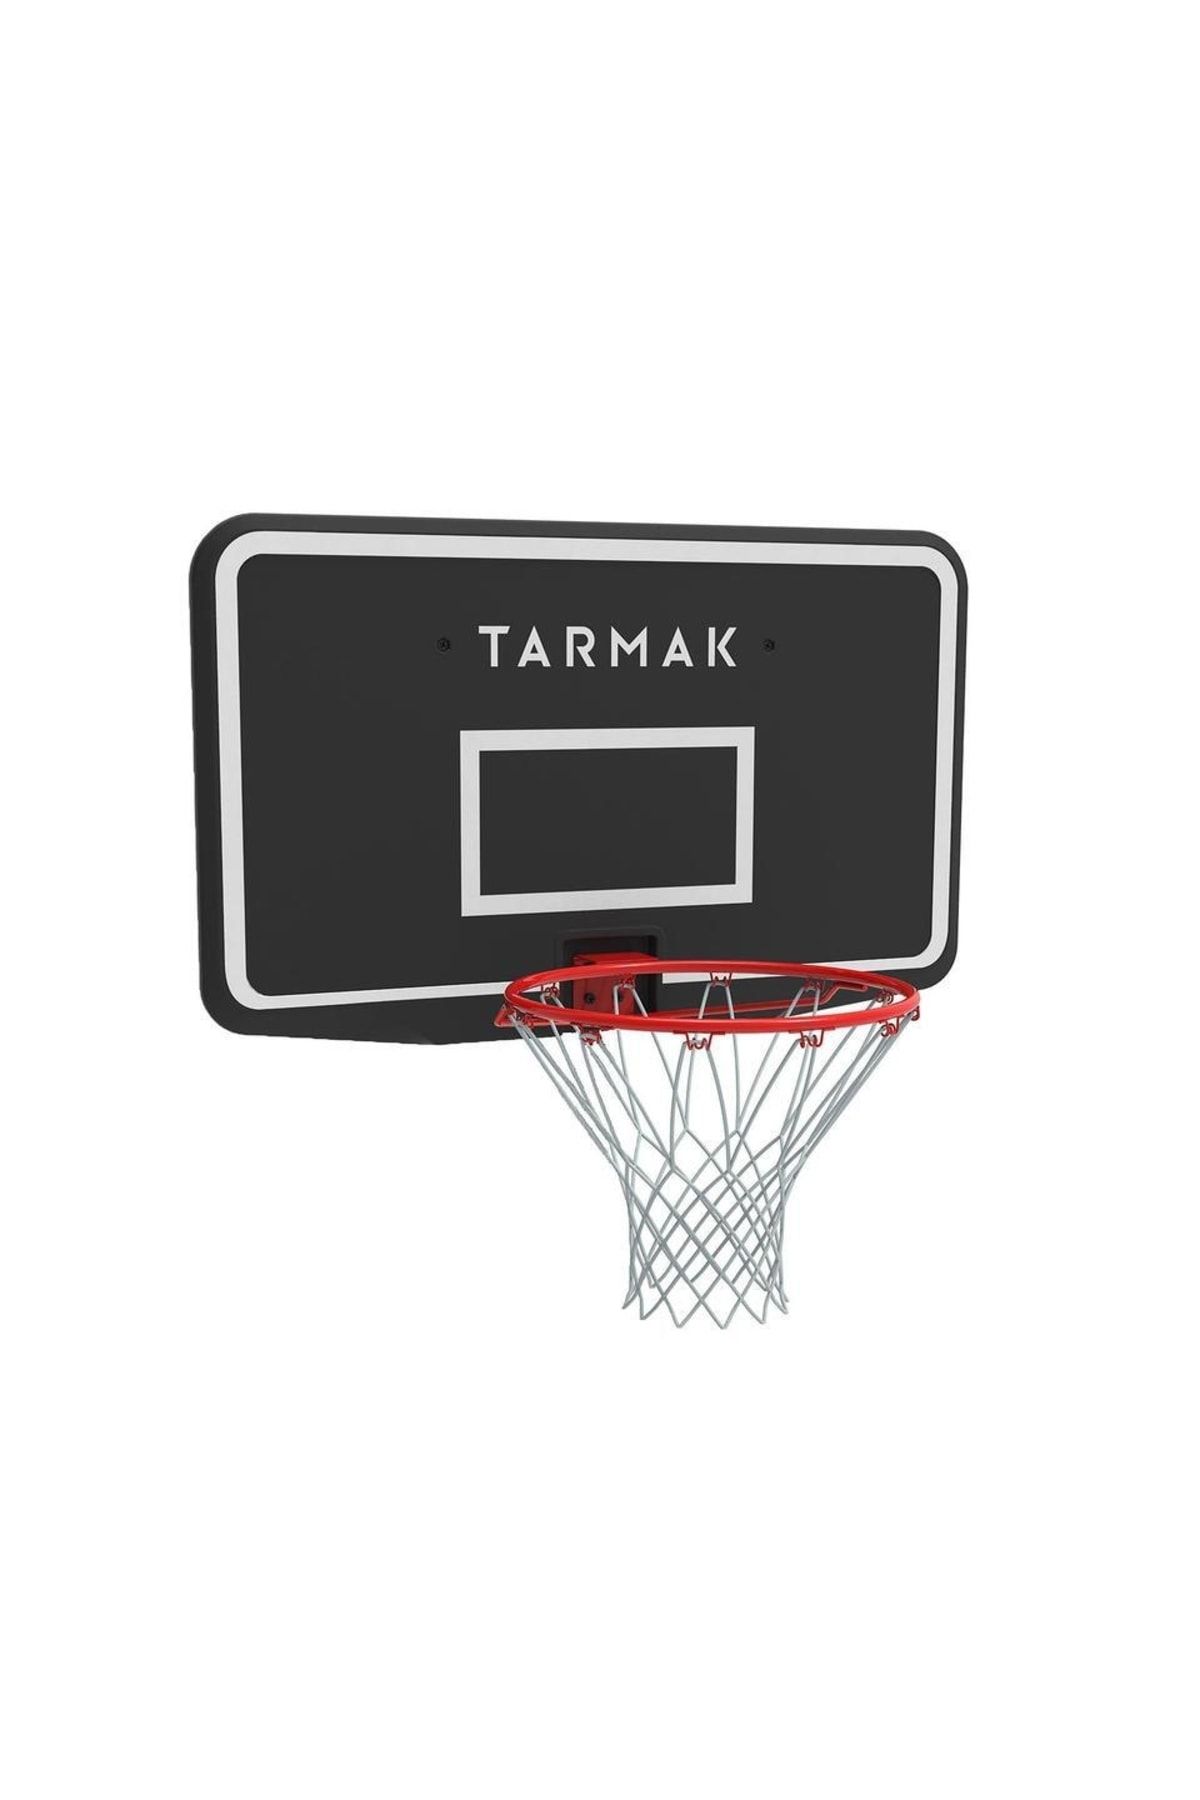 Tarmak Trendfo- Basketbol Potası- Siyah / Kırmızı - Sb102